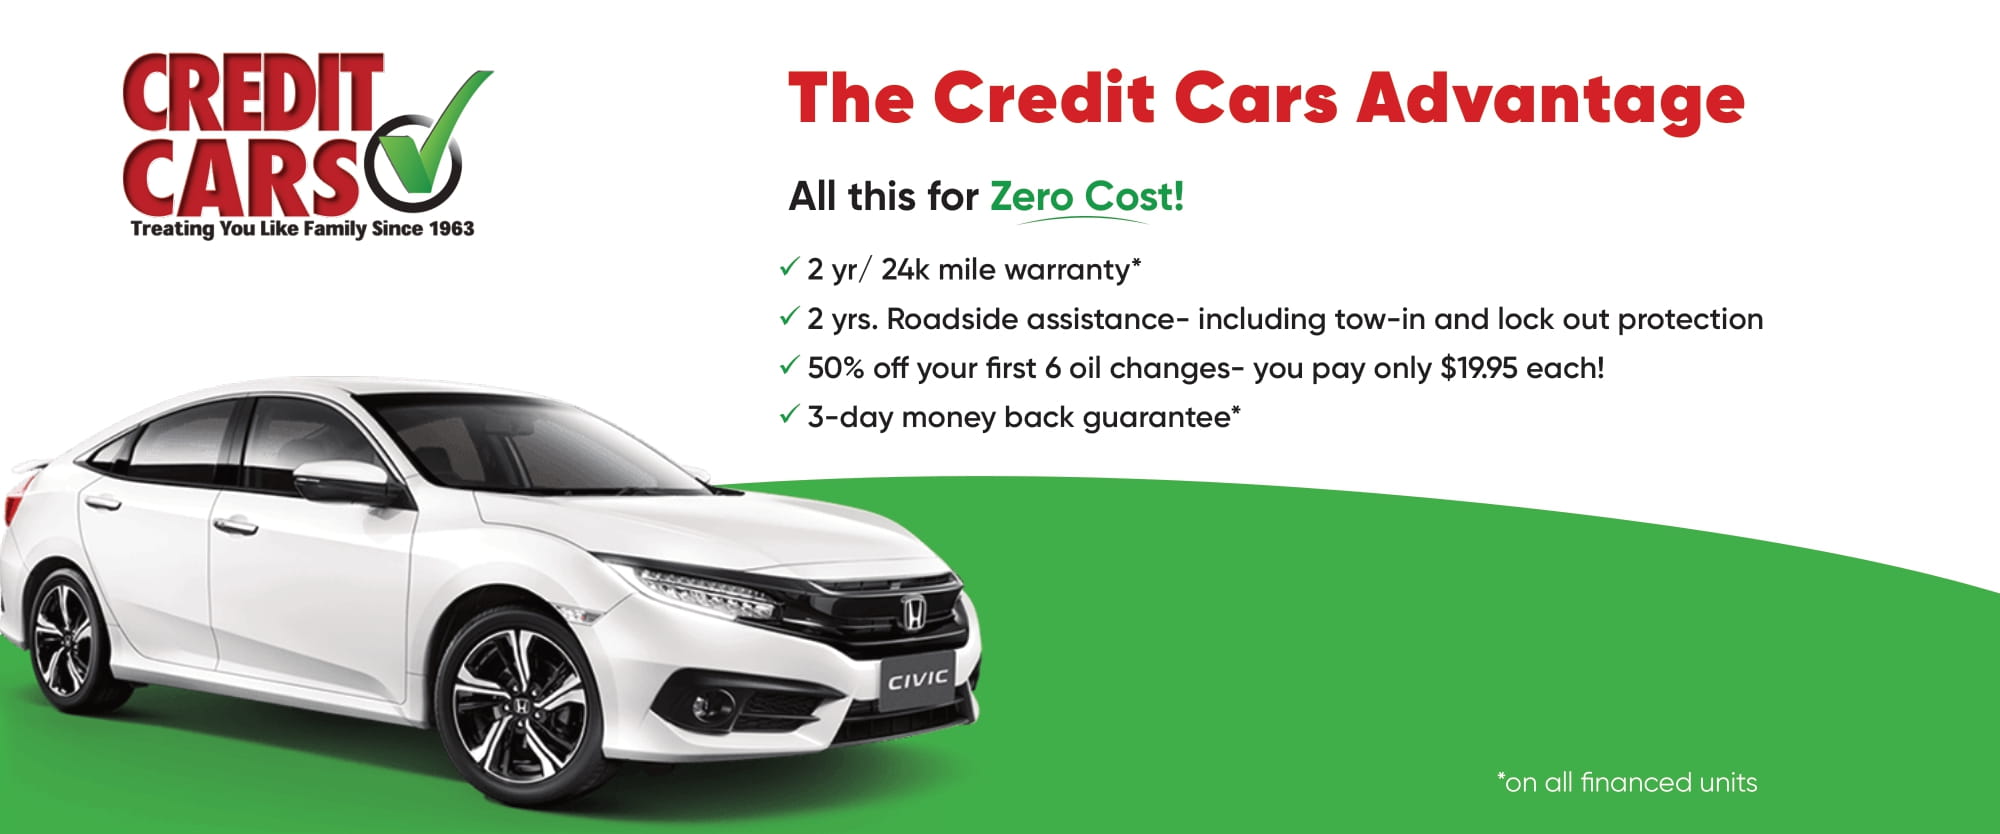 Credit Cars Advantage